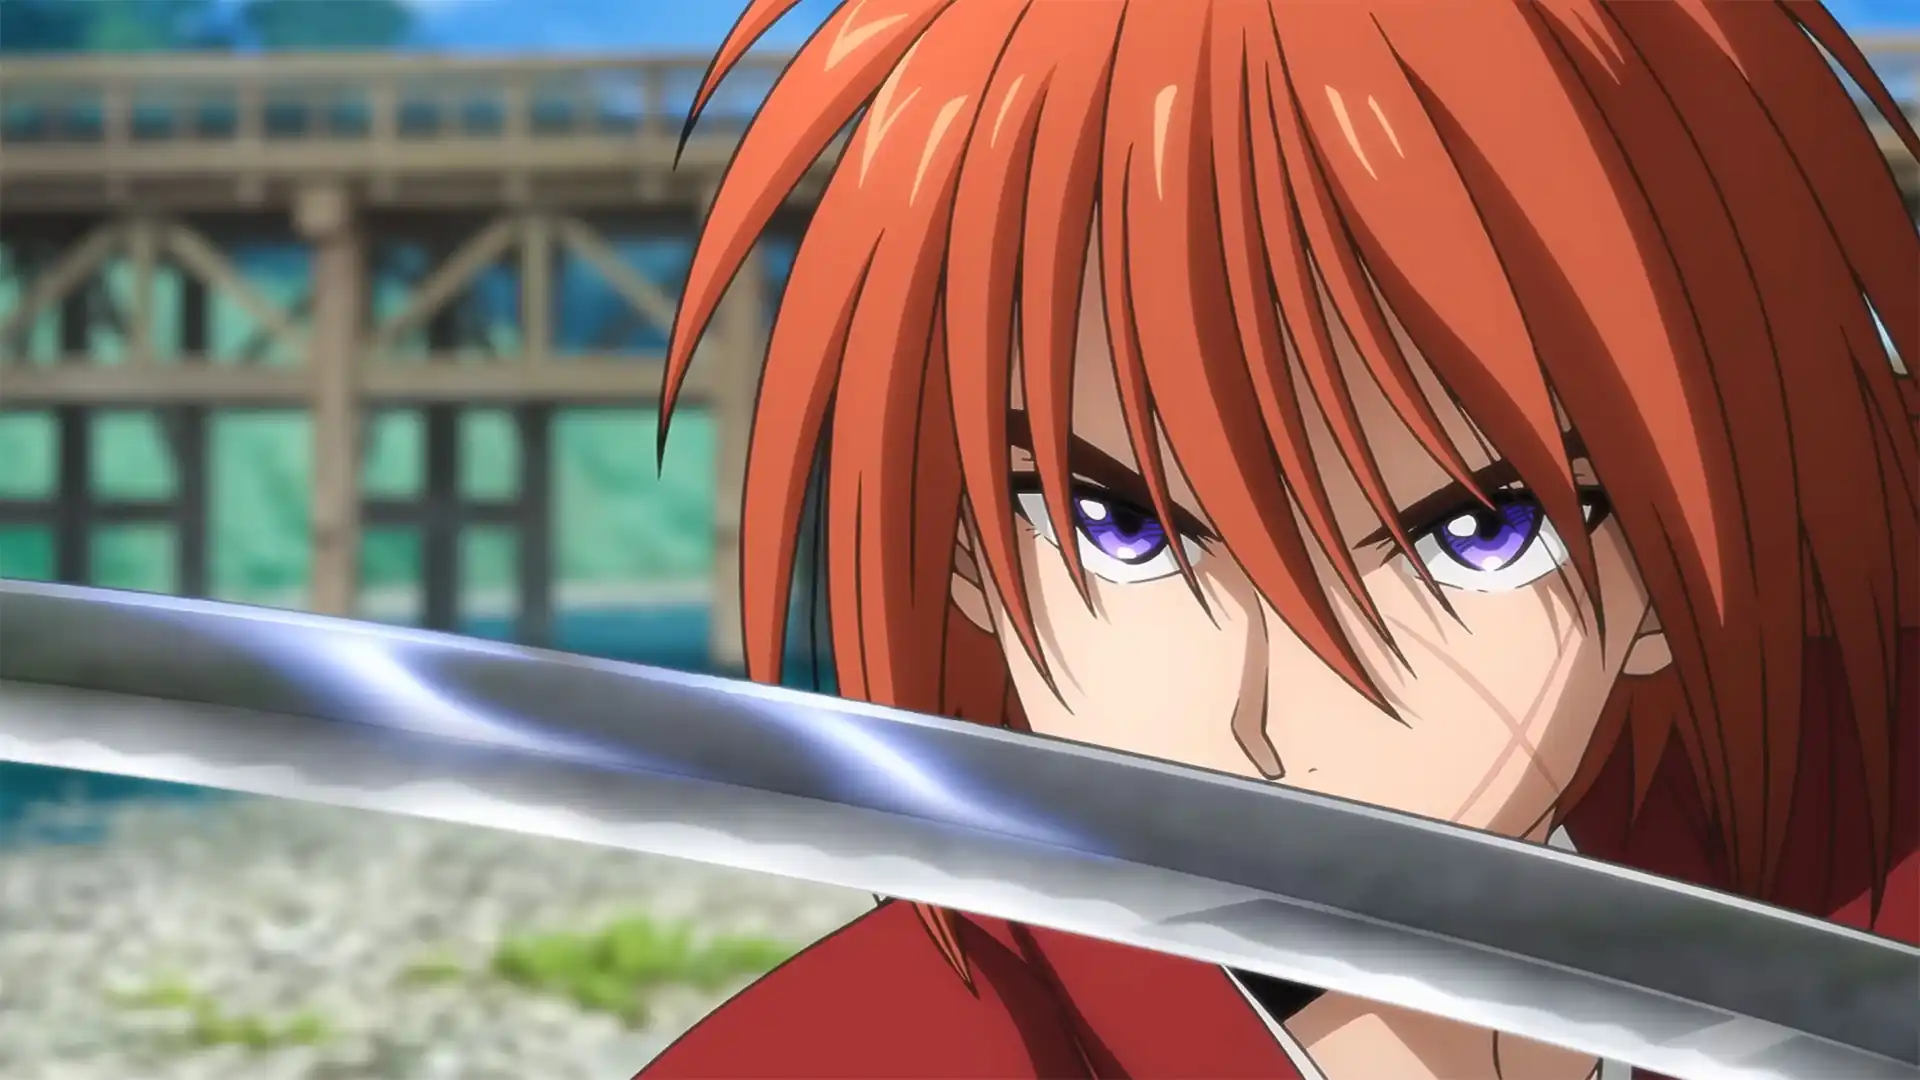 New Rurouni Kenshin Fails to Surpass the Original Anime